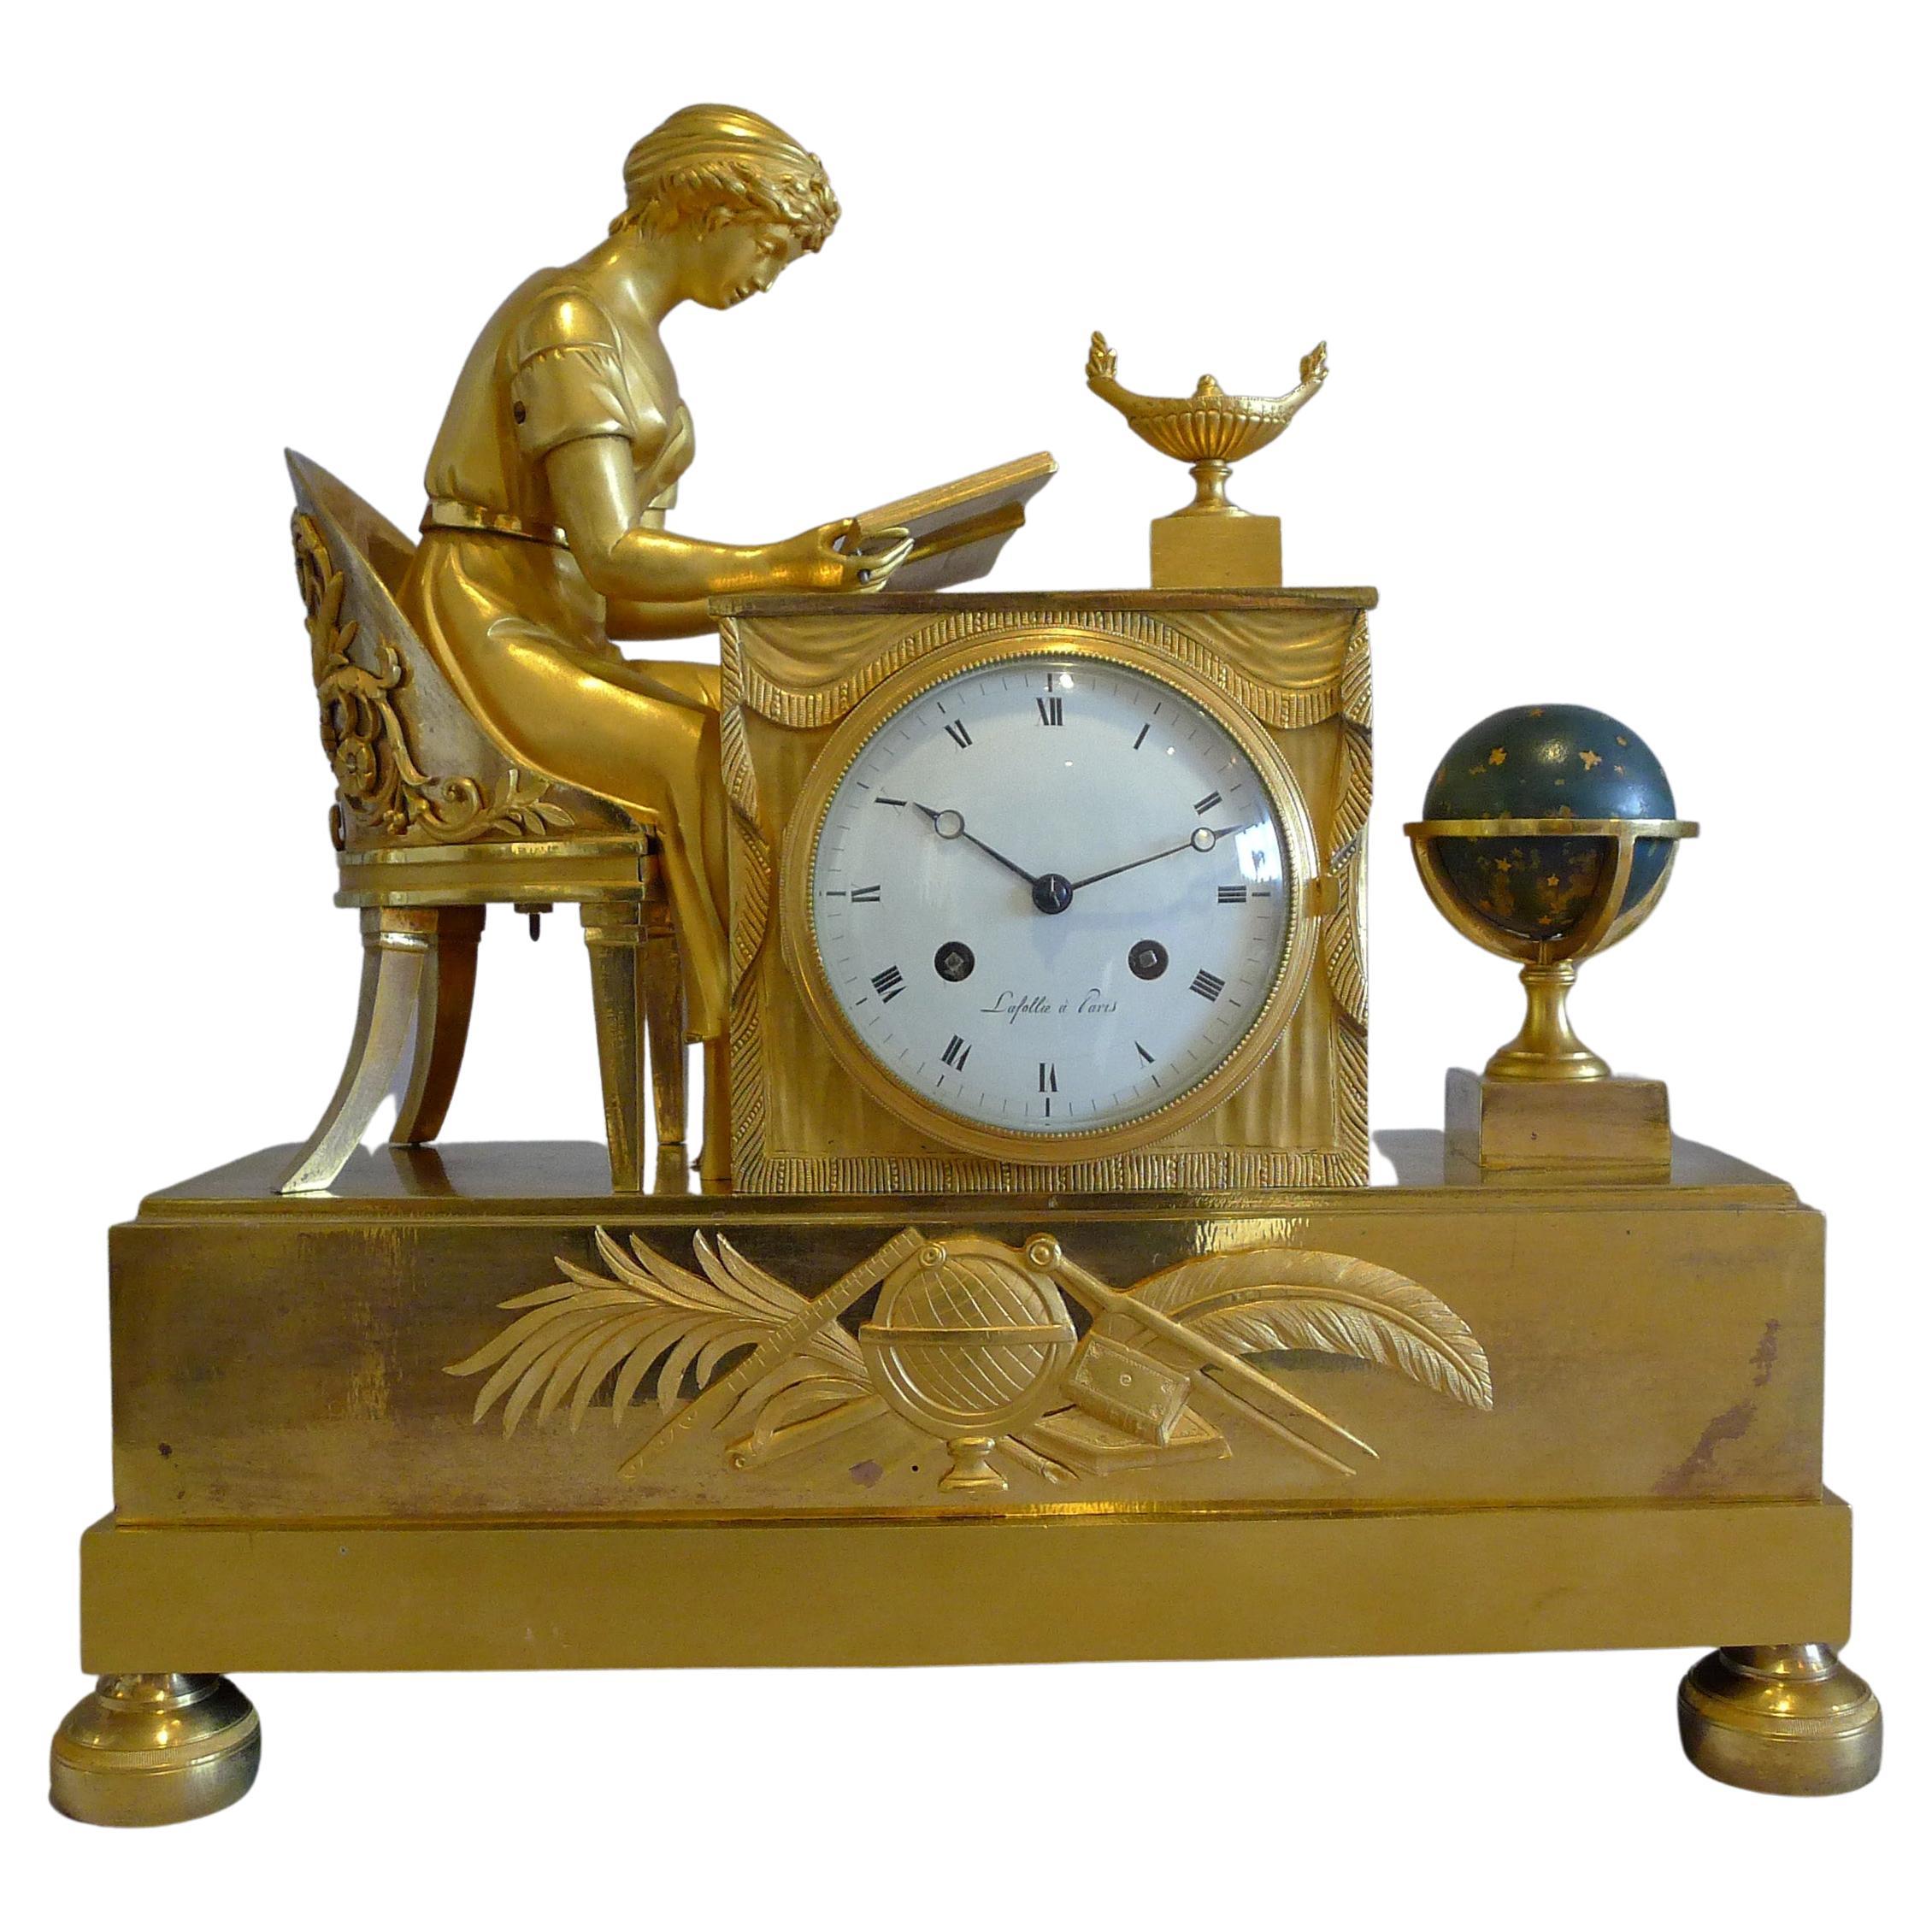 Rare French Empire Ormolu Clock of Astronomy Lesson Signed Lafollie a Paris